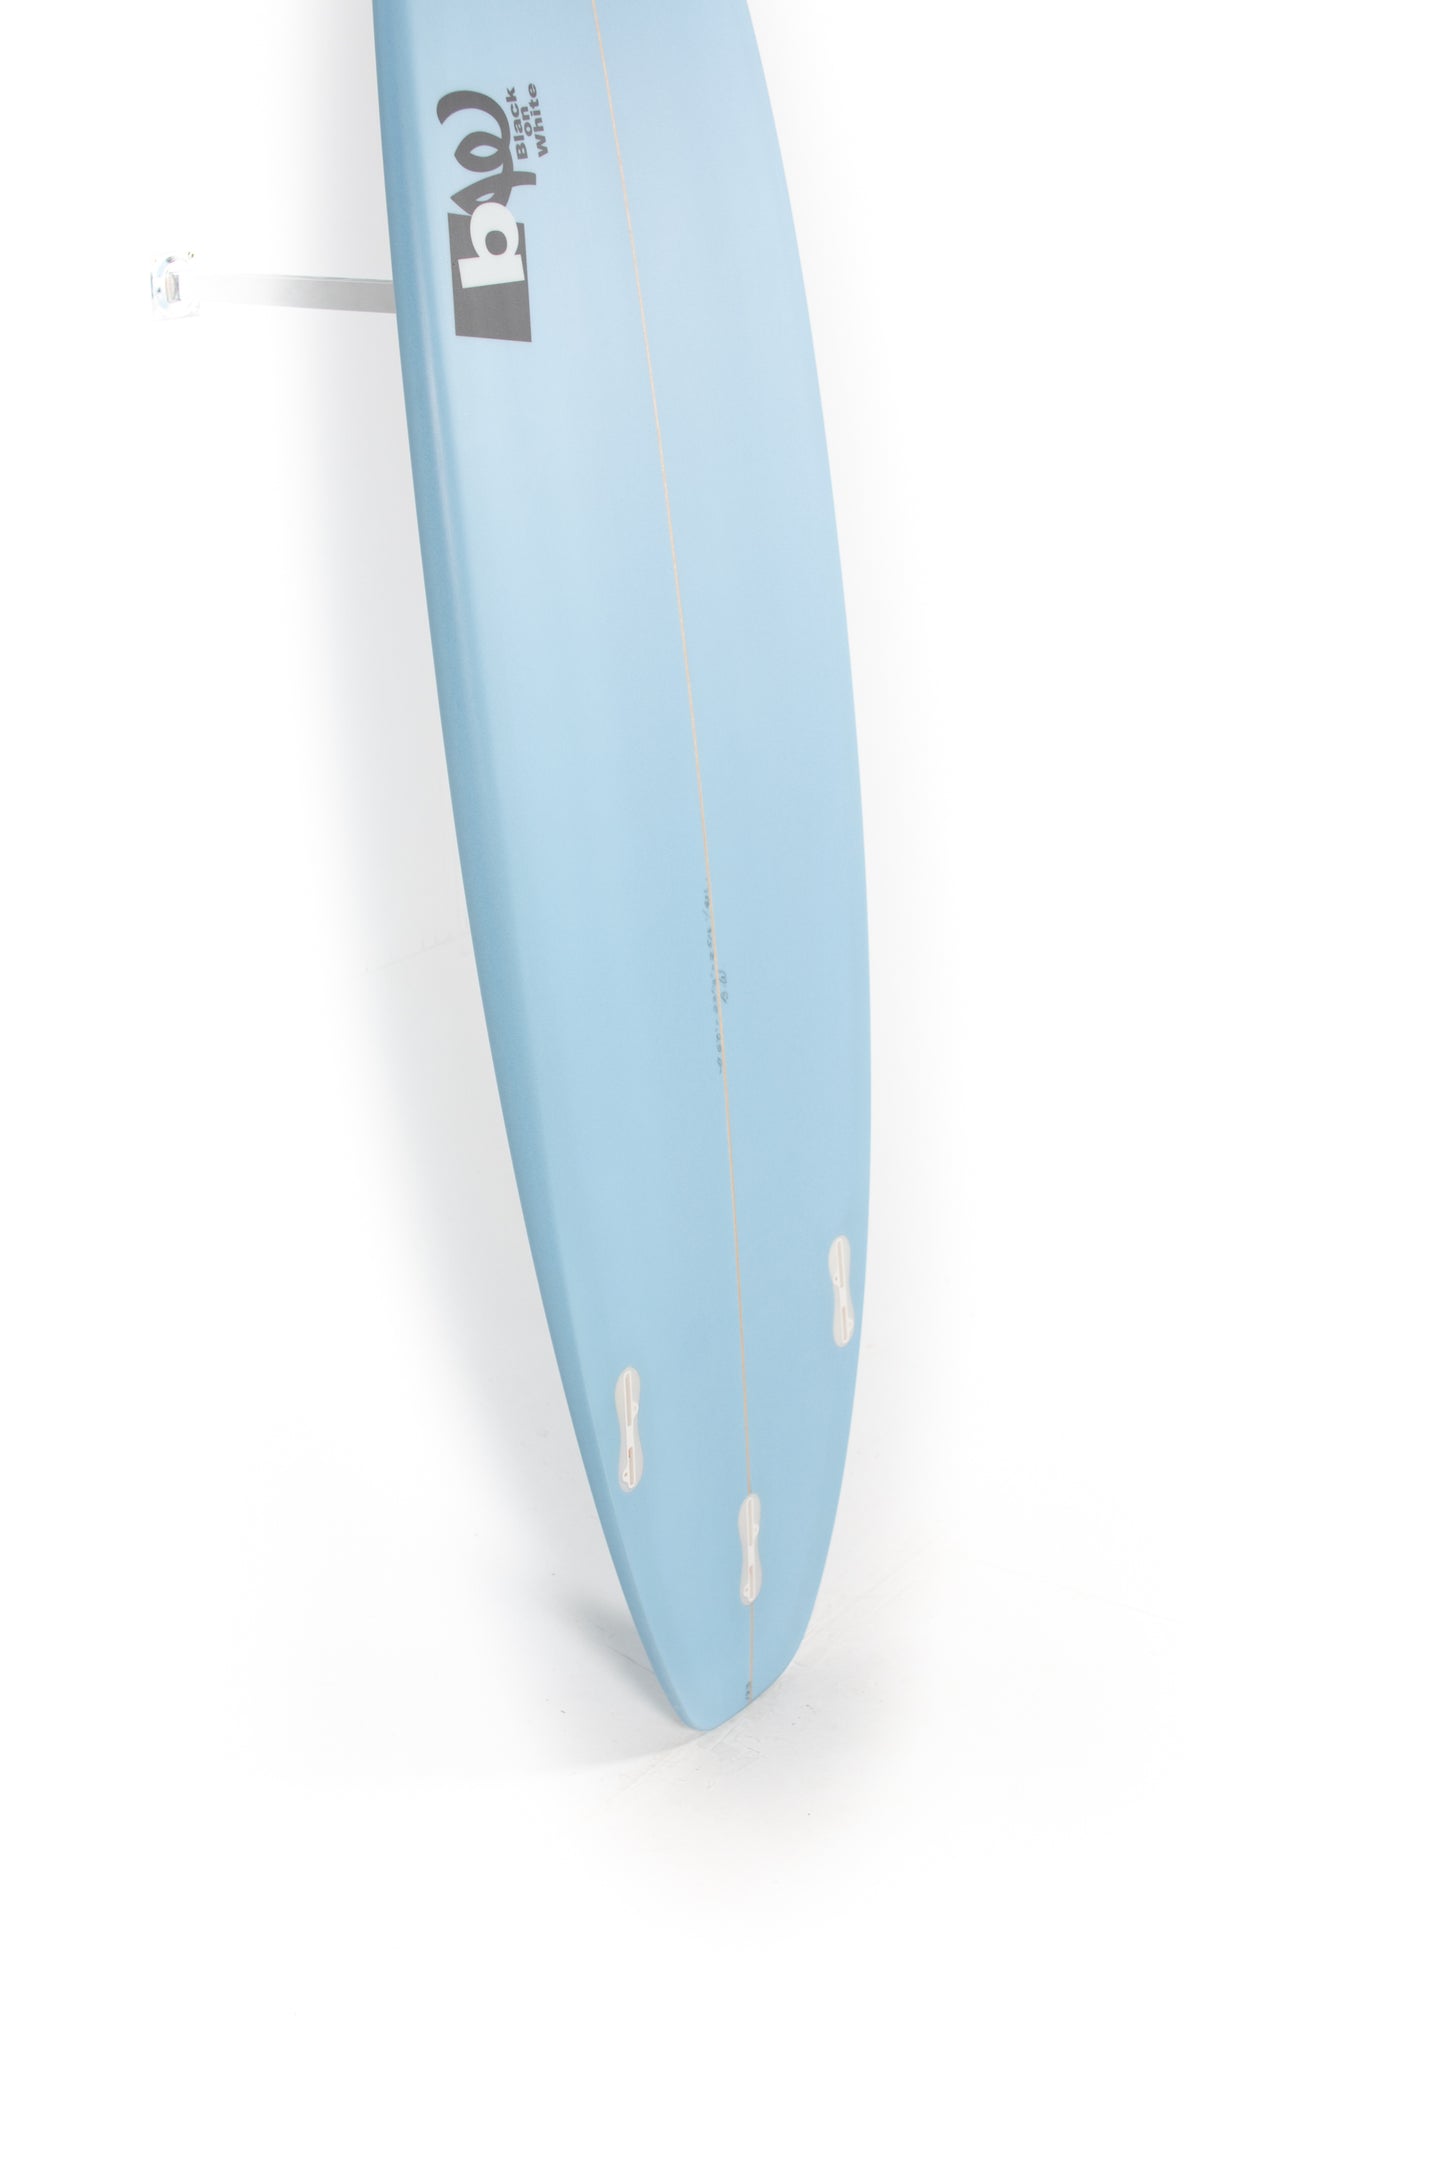 
                  
                    Pukas-Surf-Shop-BW-Surfboards-Potato-6_0
                  
                